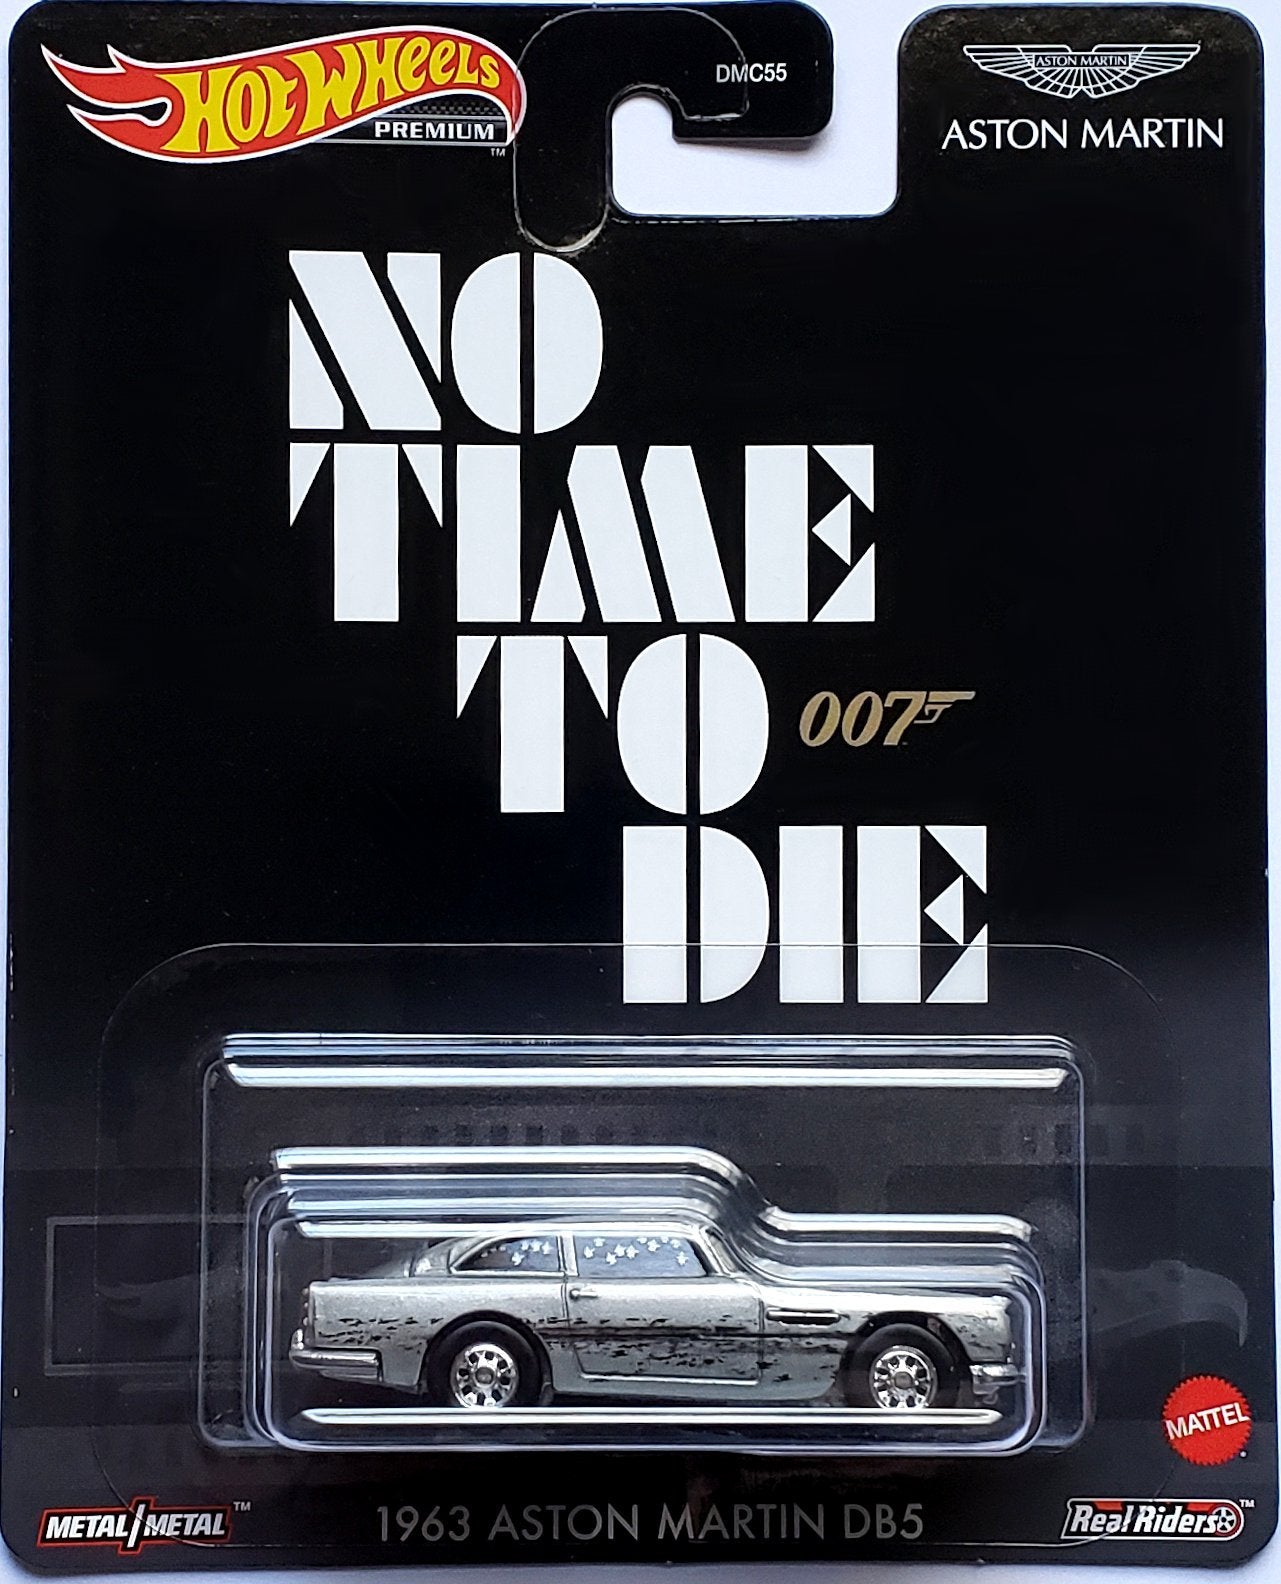 Hot Wheels Premium - 1963 Aston Martin DB5 (No Time to Die) James Bond 007 GRL64